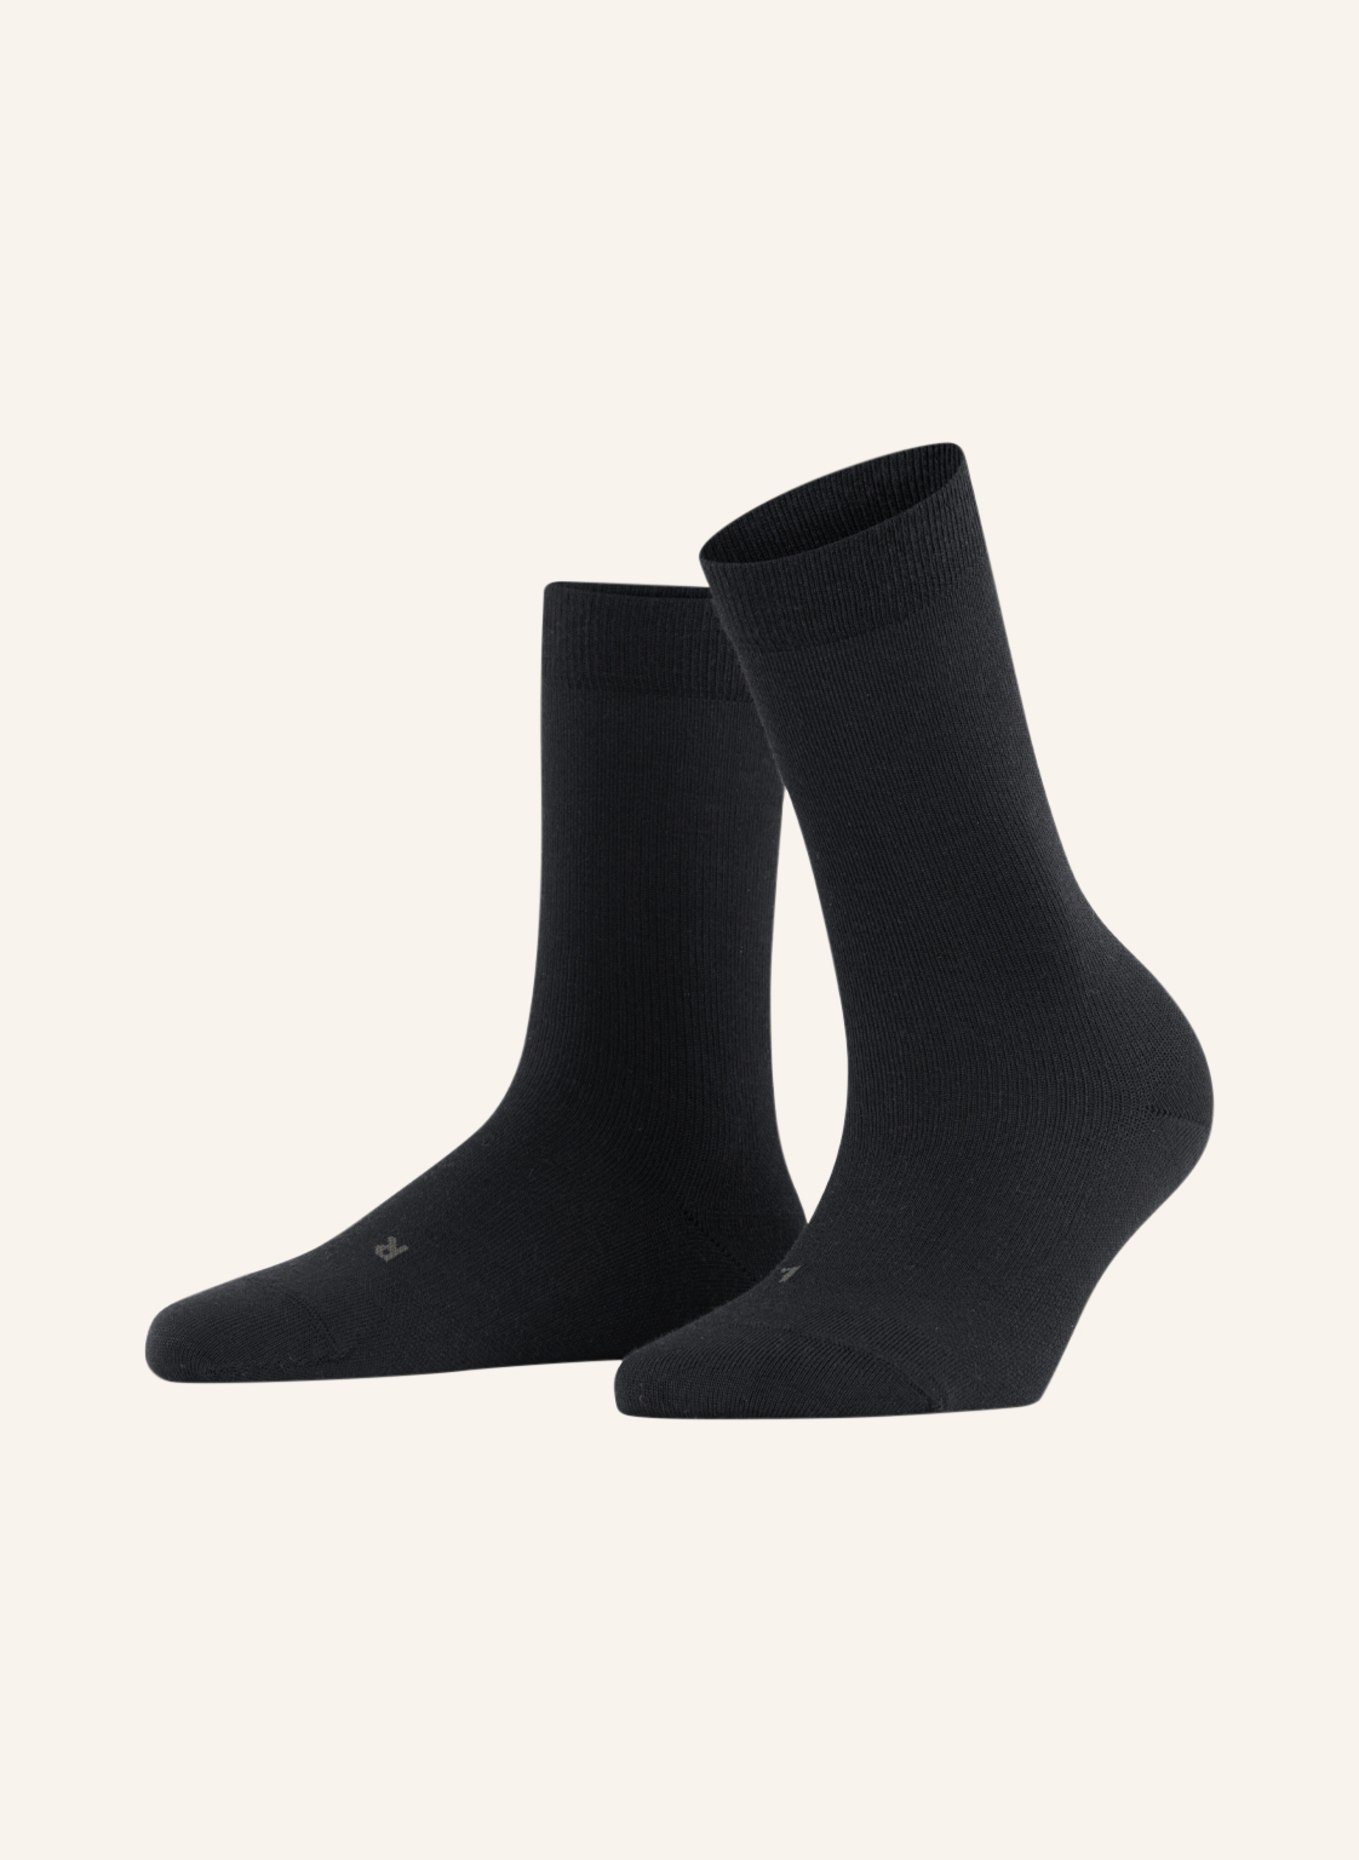 FALKE Socken STABILIZING WOOL EVERYDAY mit Merinowolle, Farbe: 3000 BLACK (Bild 1)